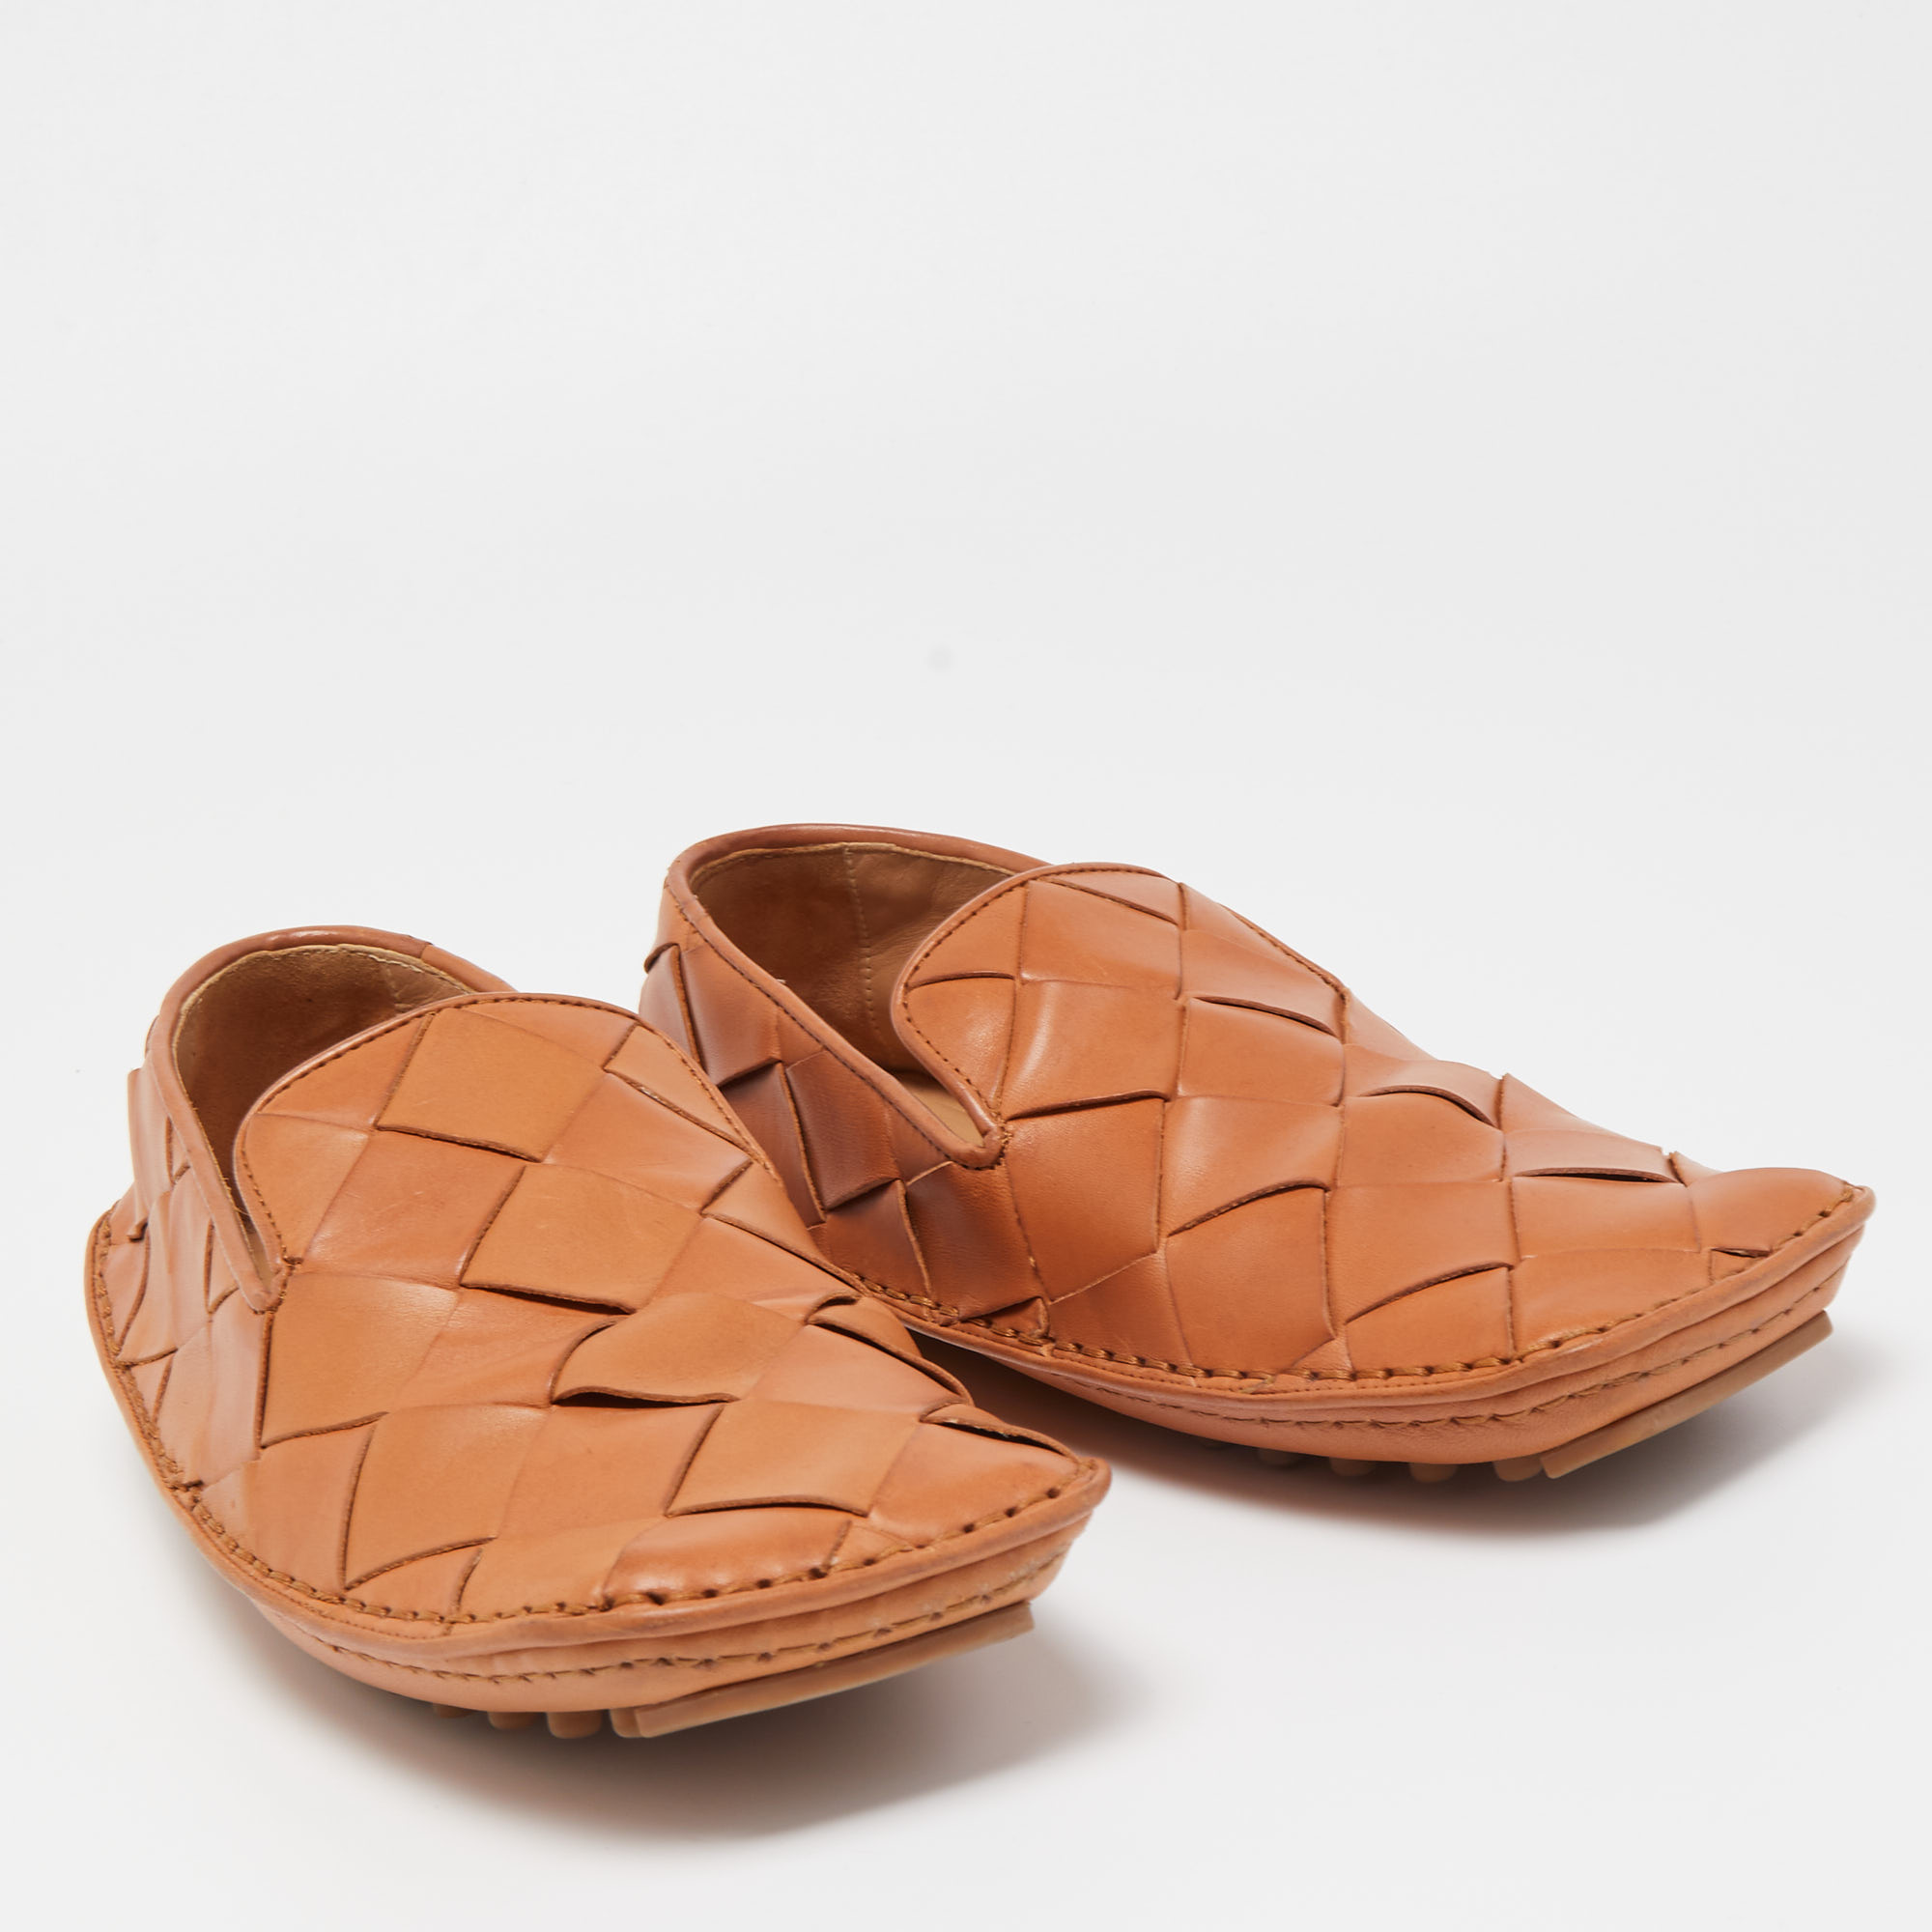 Bottega Veneta Tan Intrecciato Leather Douglas Loafers Size 37